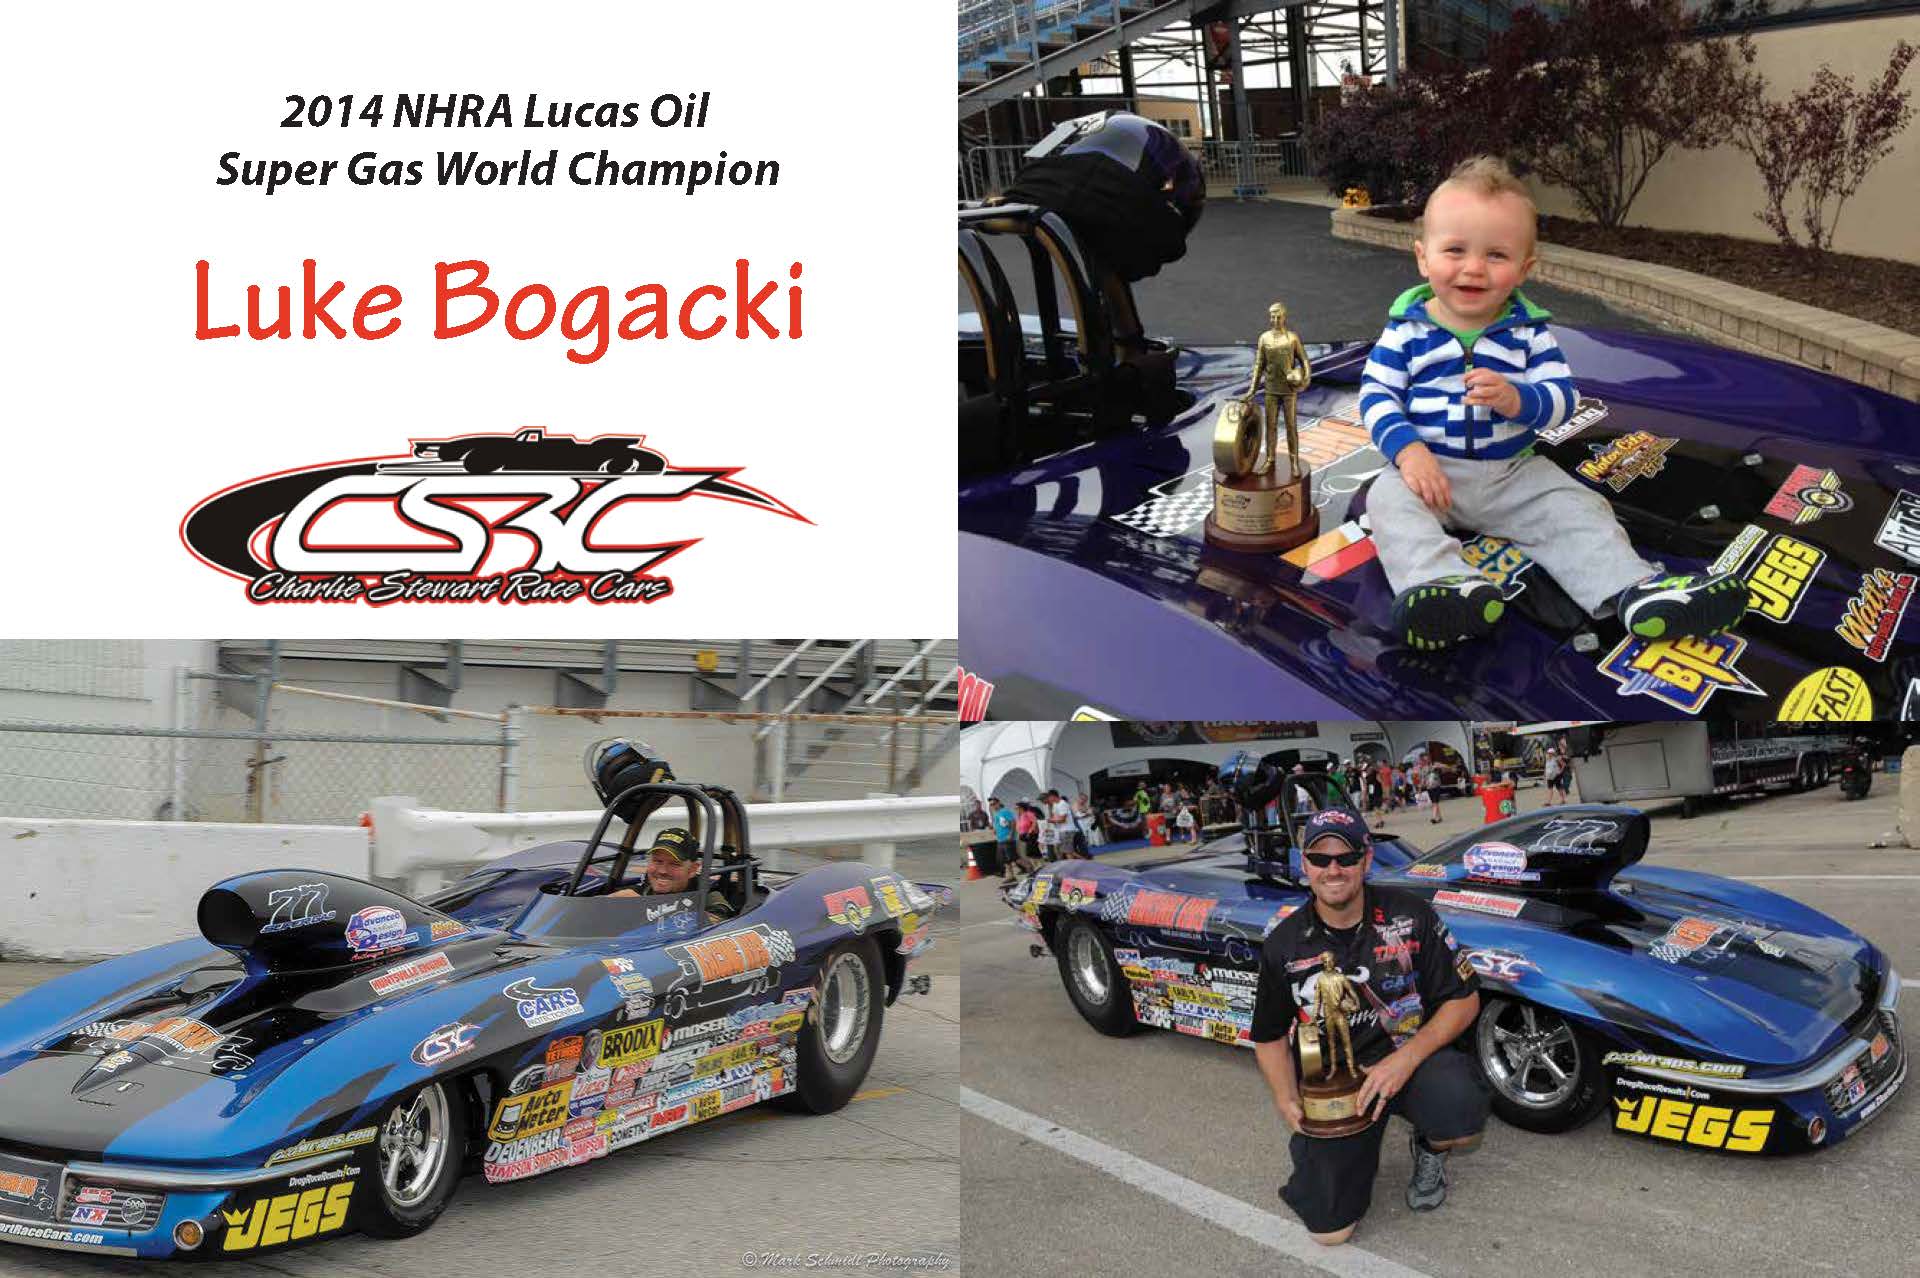 Bogacki Clinches 2014 NHRA Lucas Oil Super Gas Championship in Corvettester